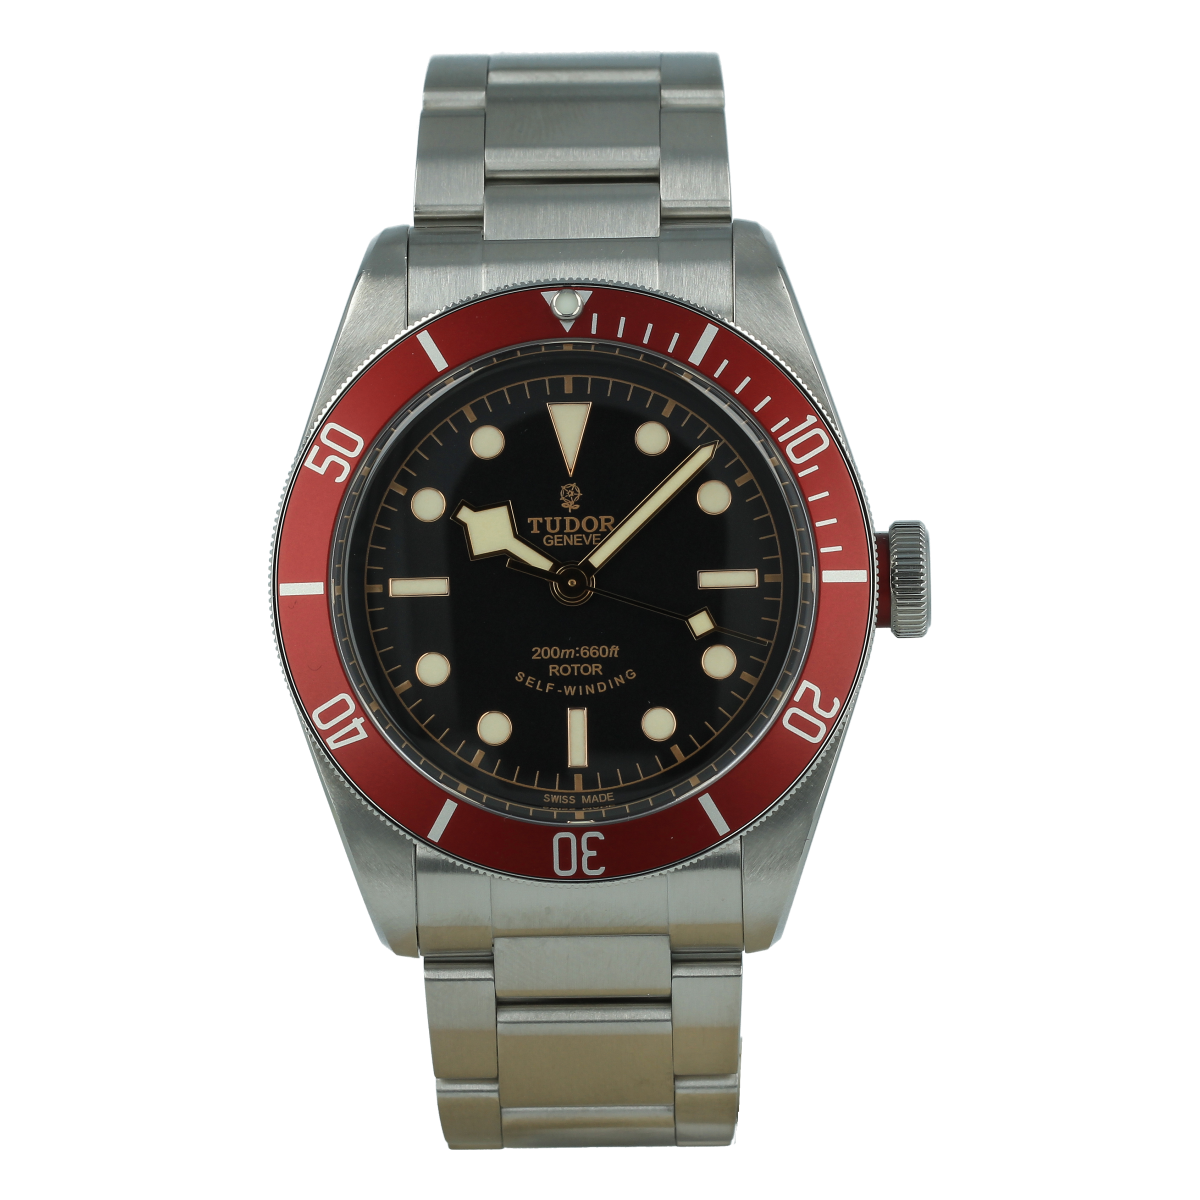 Tudor Black Bay 79220N | Comprar reloj Tudor segunda mano